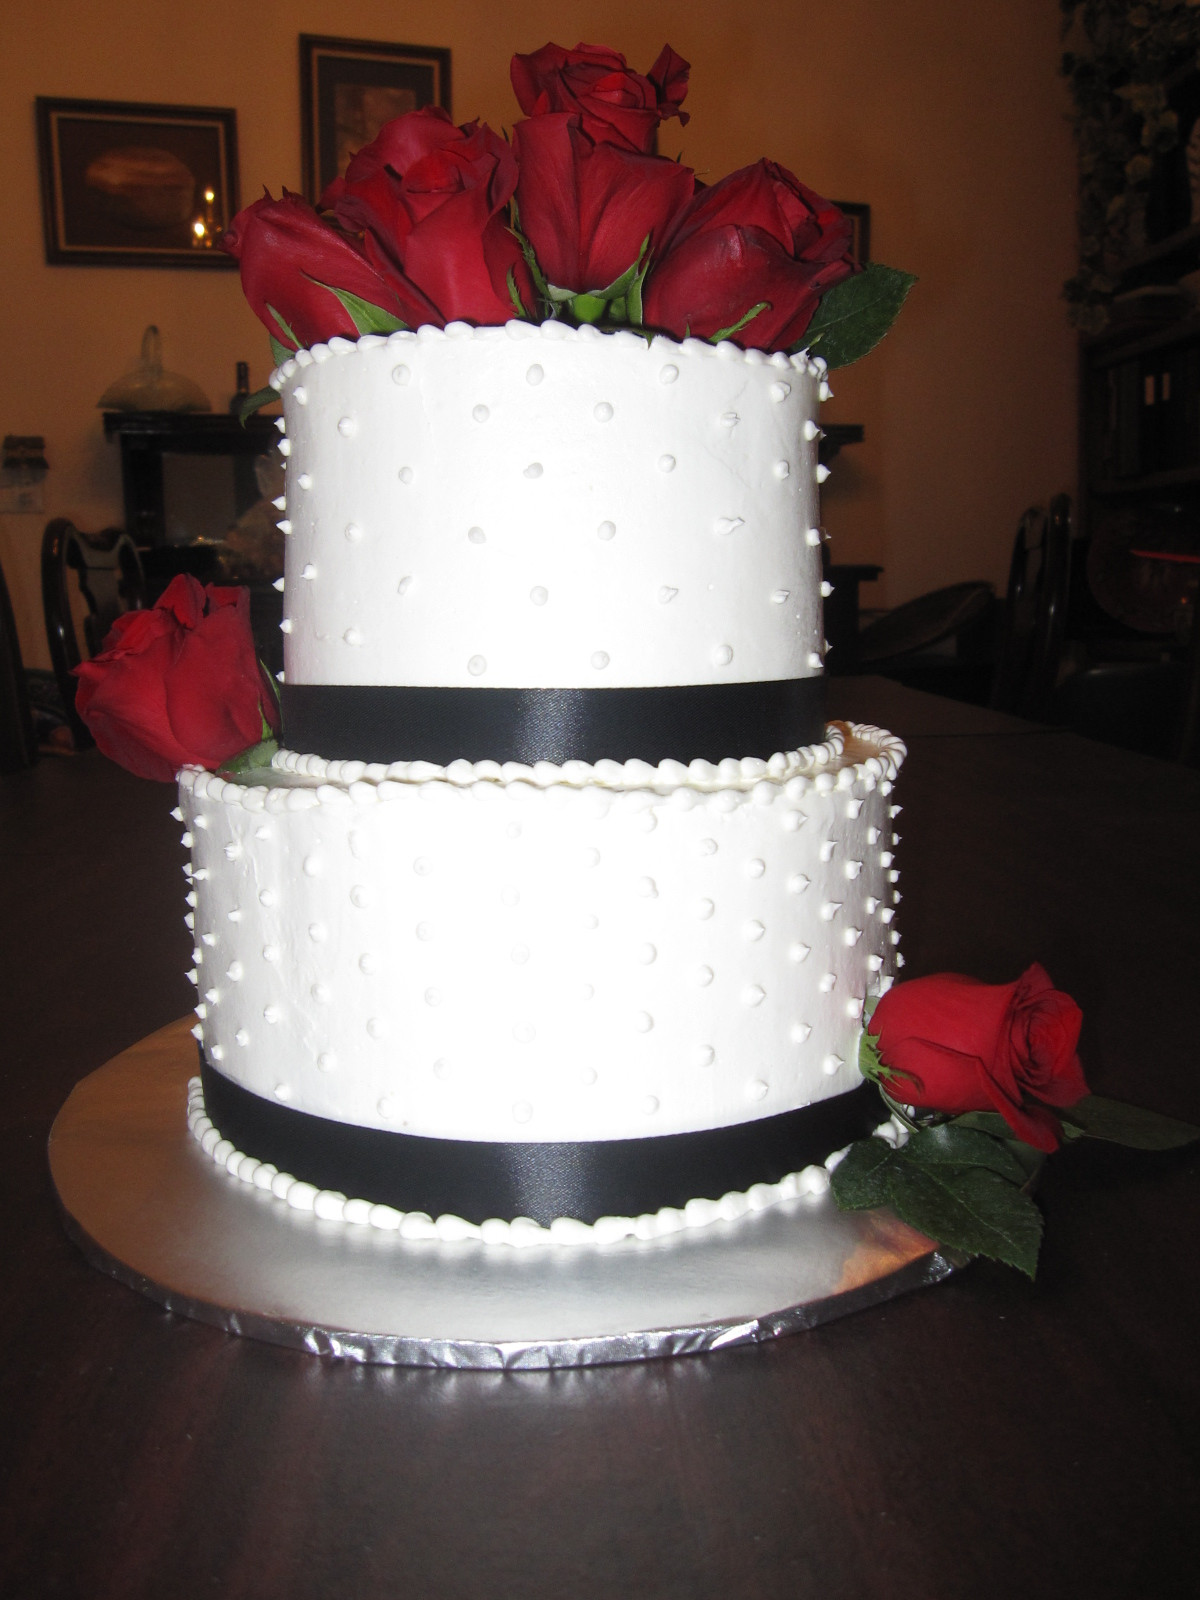 Costco Wedding Cakes Pictures
 Costco wedding cakes idea in 2017